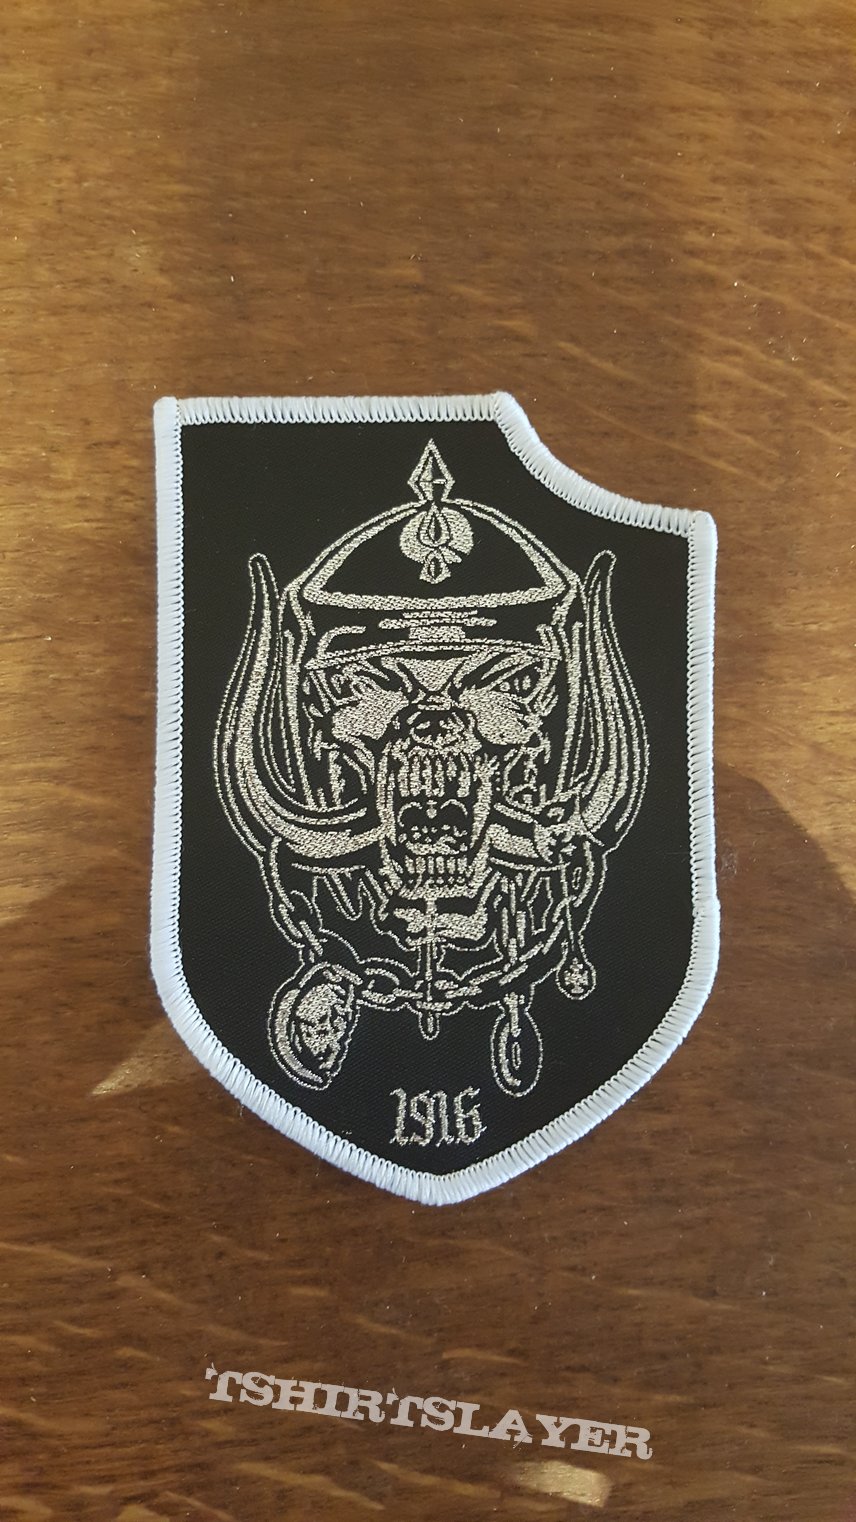 Motörhead - 1916 shield patch